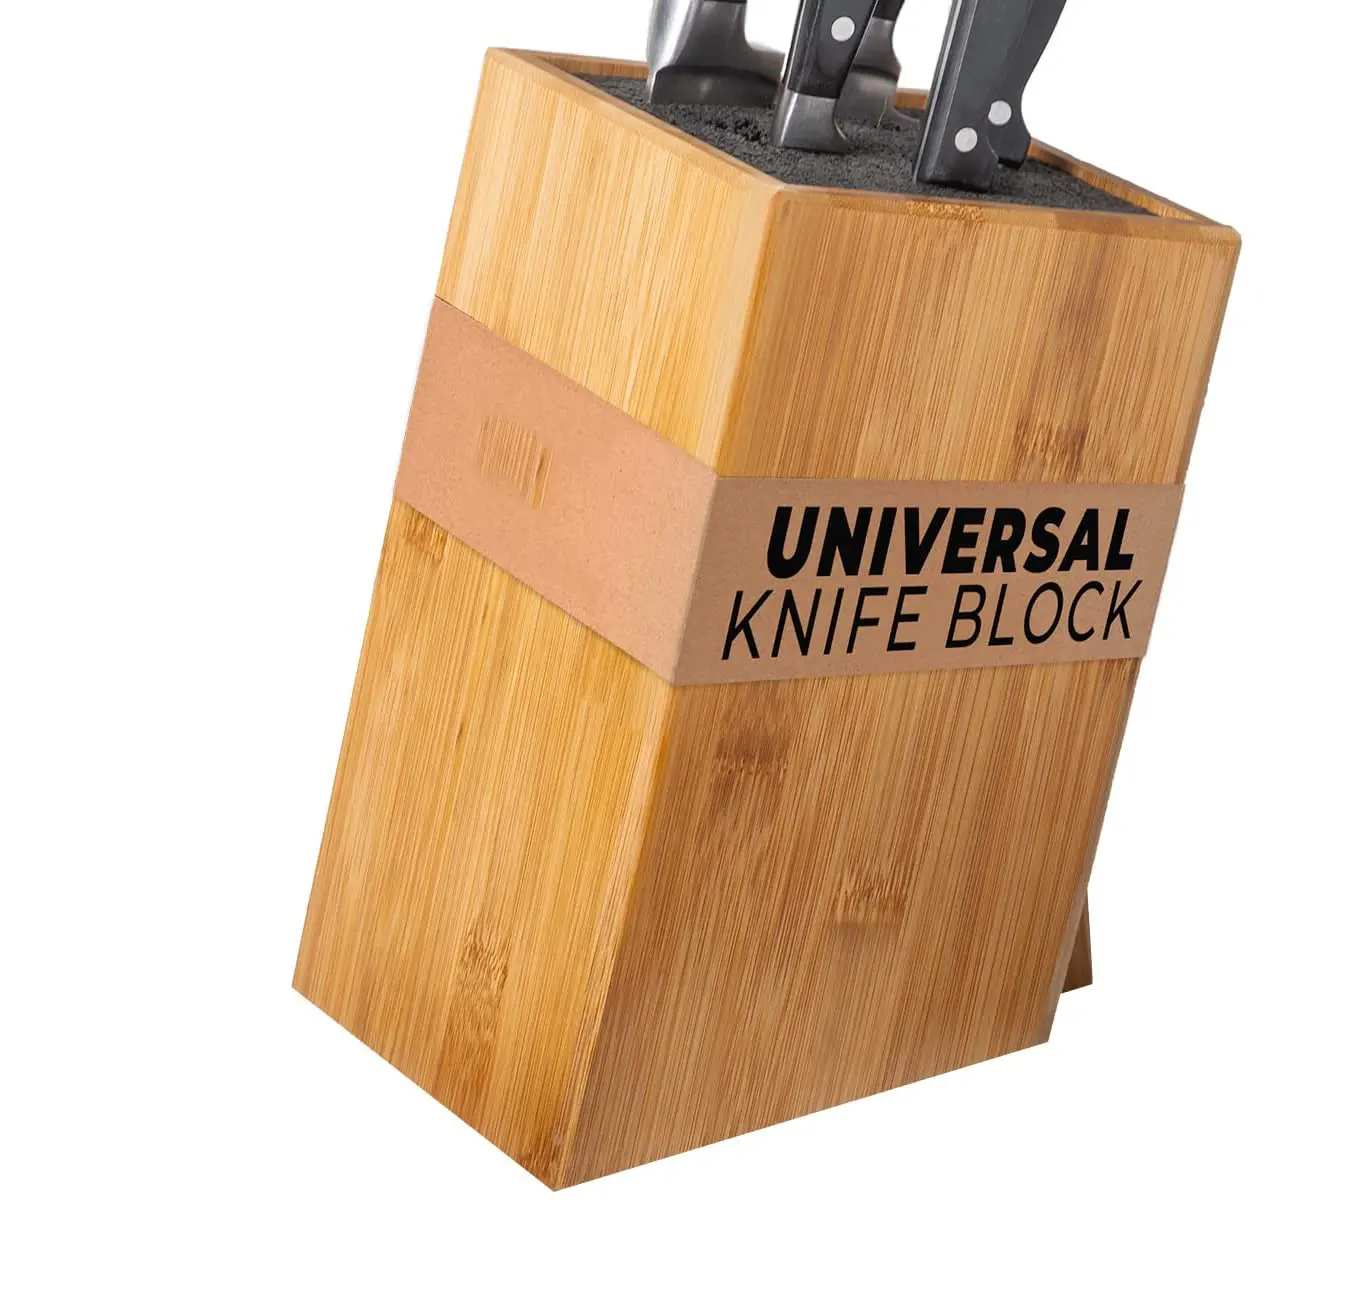 Grande bloco universal de faca, sem facas, suporte de faca de bancada de bambu com cerdas removíveis